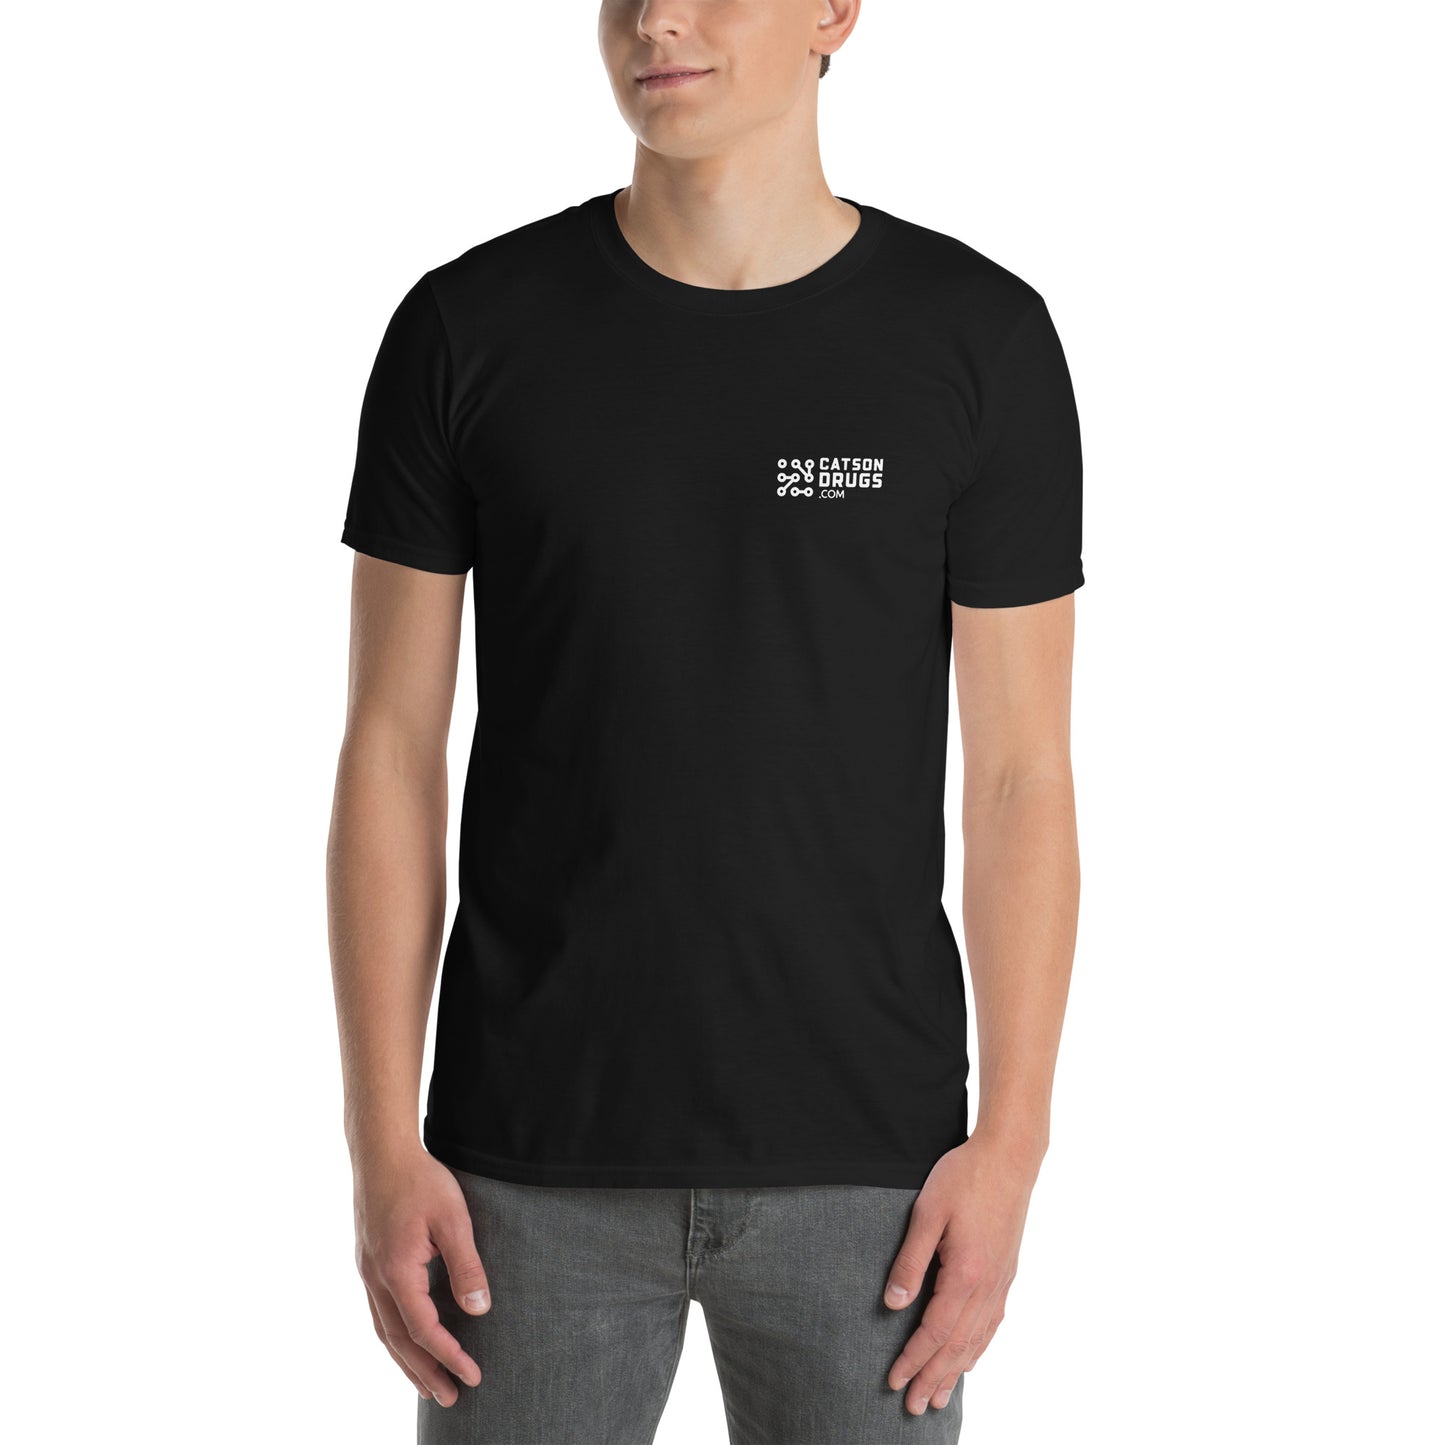 Follow Me -  Unisex T-Shirt